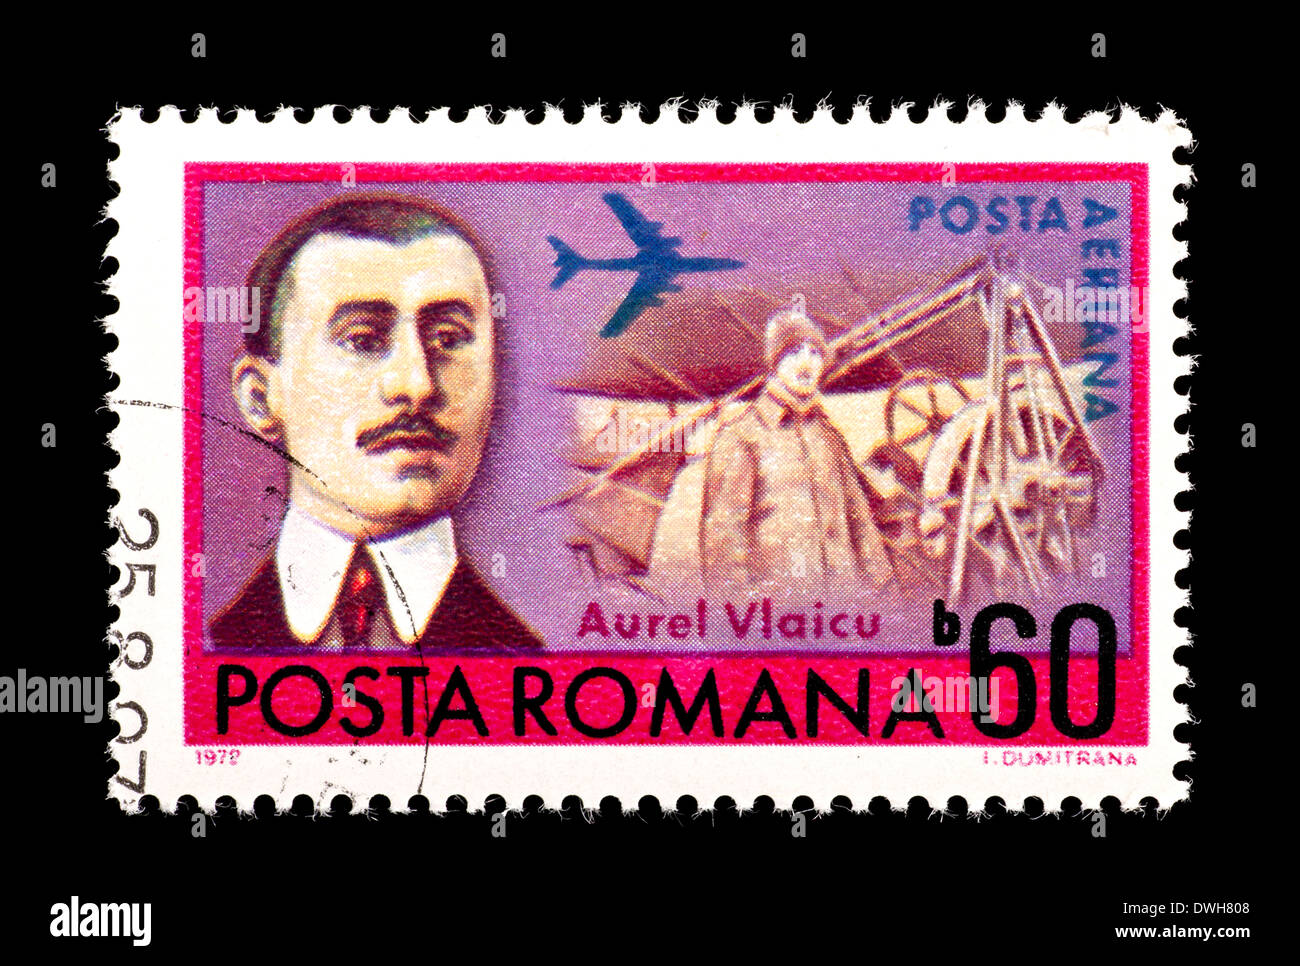 Postage stamp from Romania depicting Aurel Vlaicu, Romanian aviation pioneer. Stock Photo